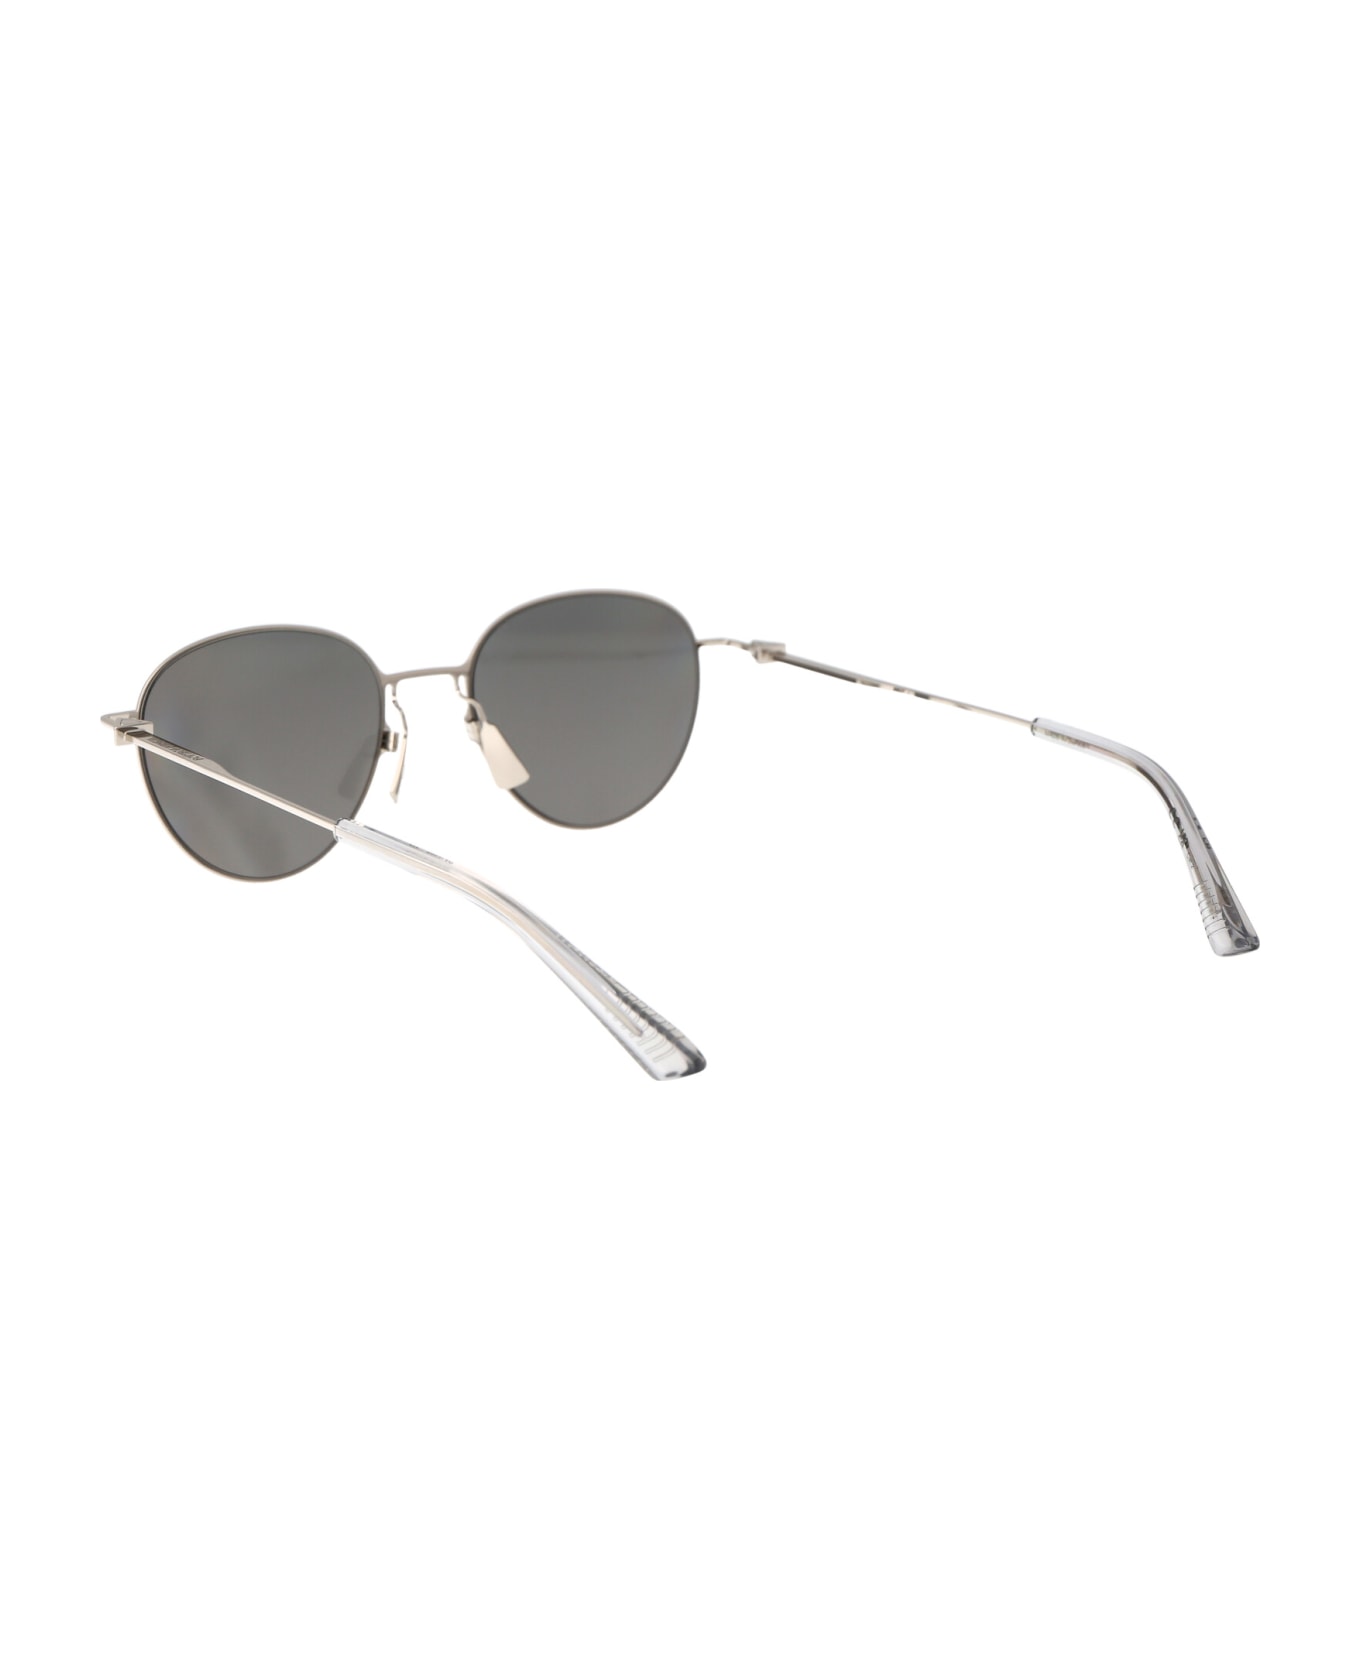 Bottega Veneta Eyewear Bv1268s Sunglasses - 003 SILVER SILVER SILVER サングラス